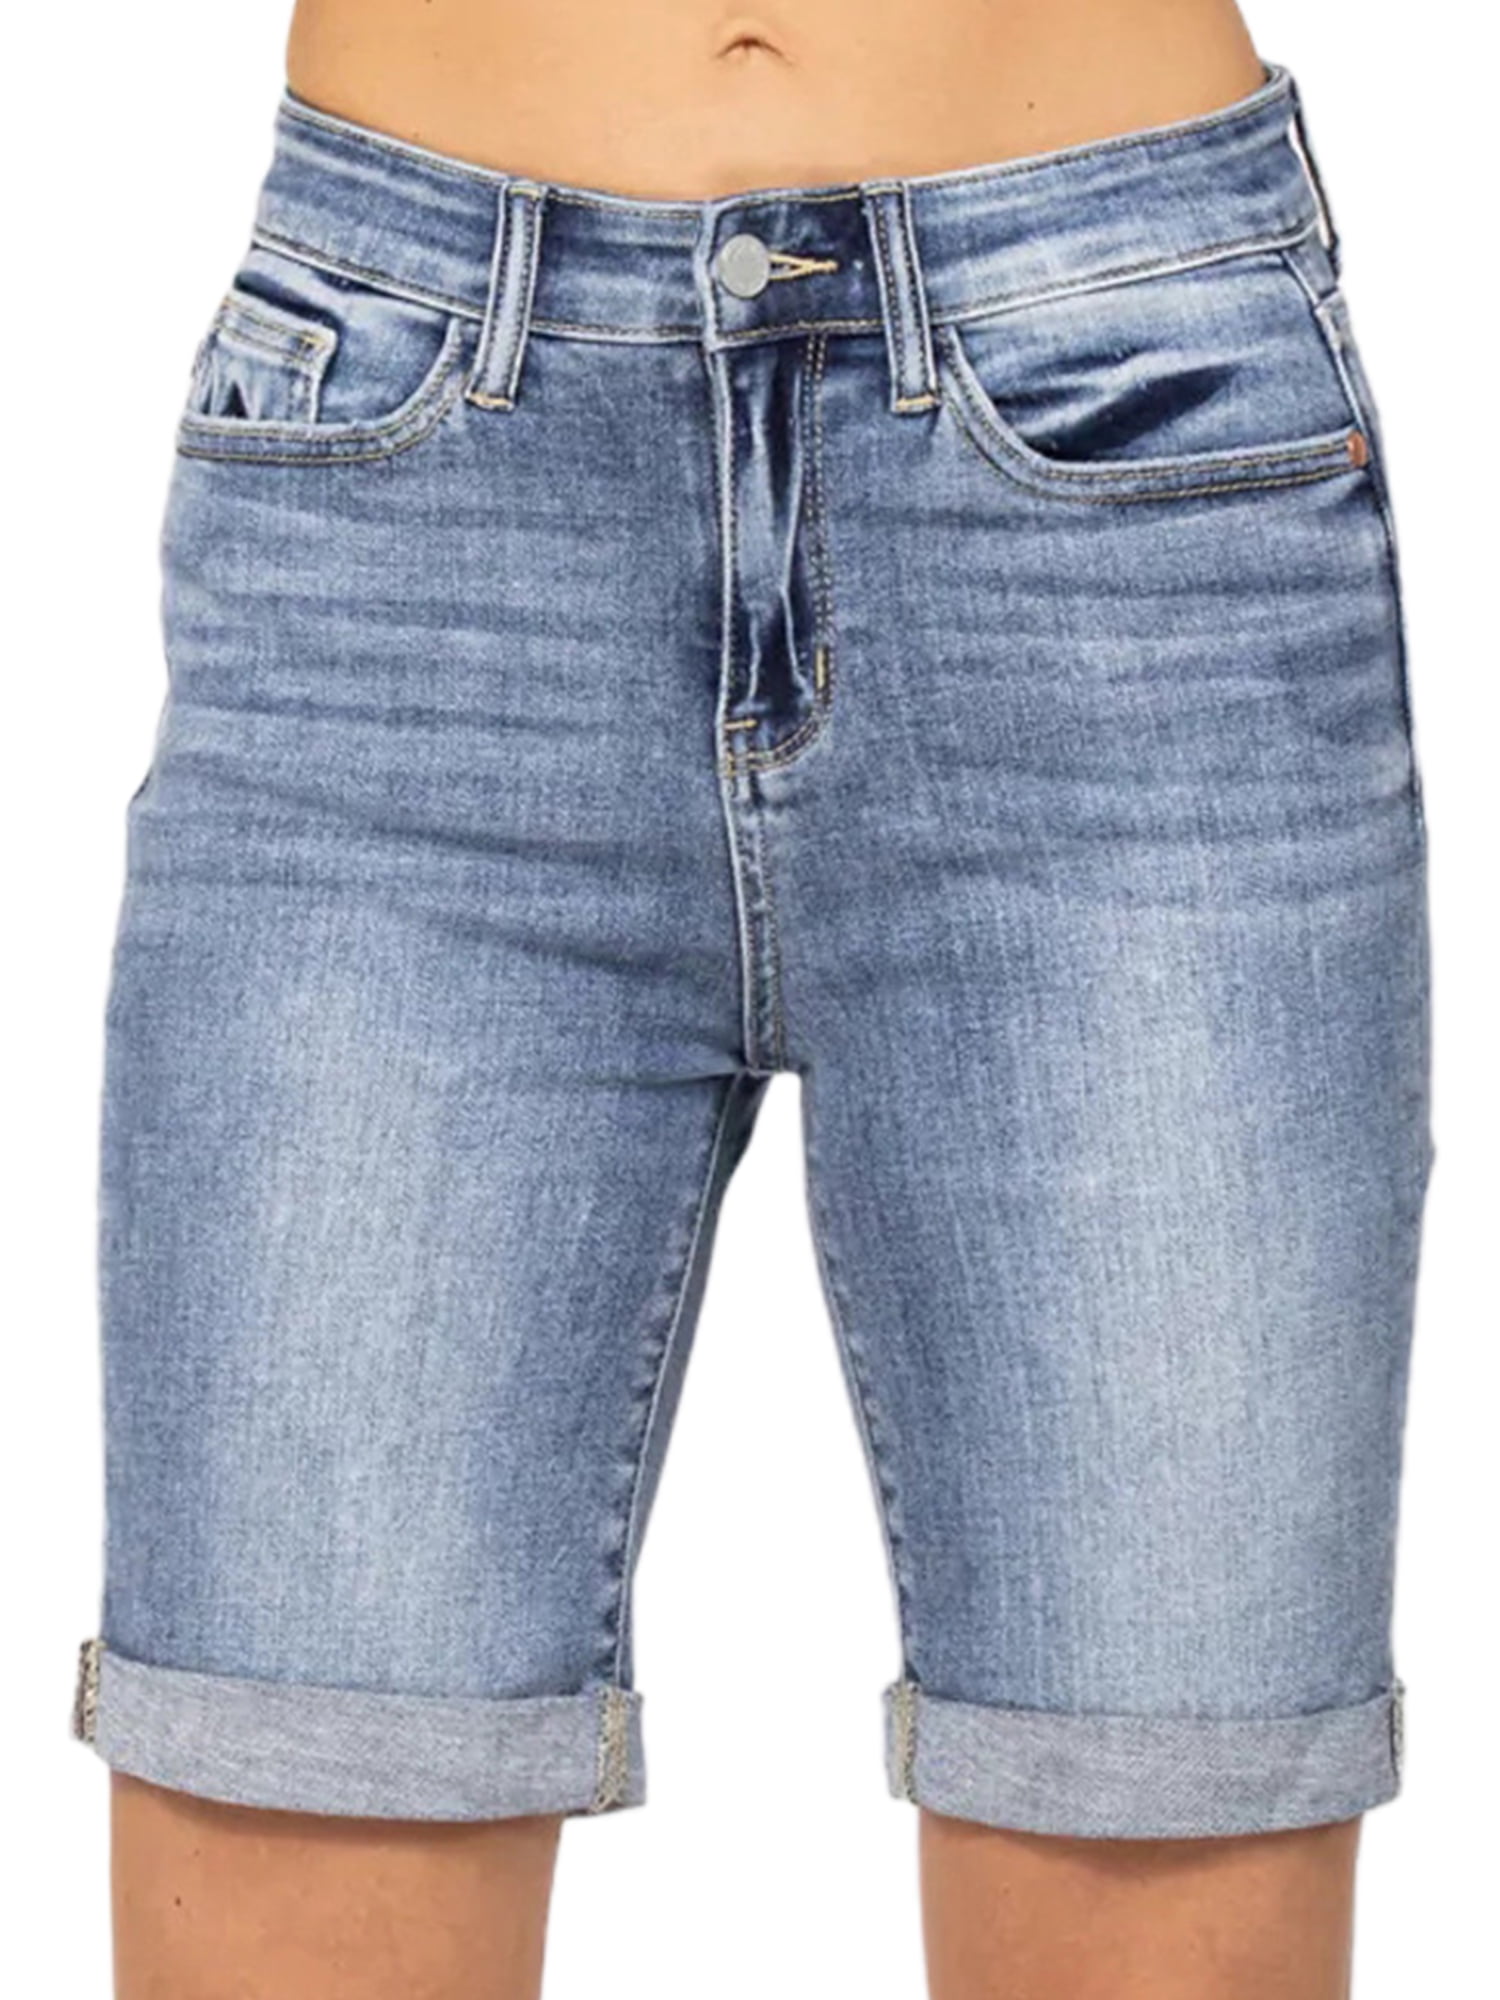 Niuer Ladies Summer Denim Shorts Zipper Short Jeans Bermuda Mini ...